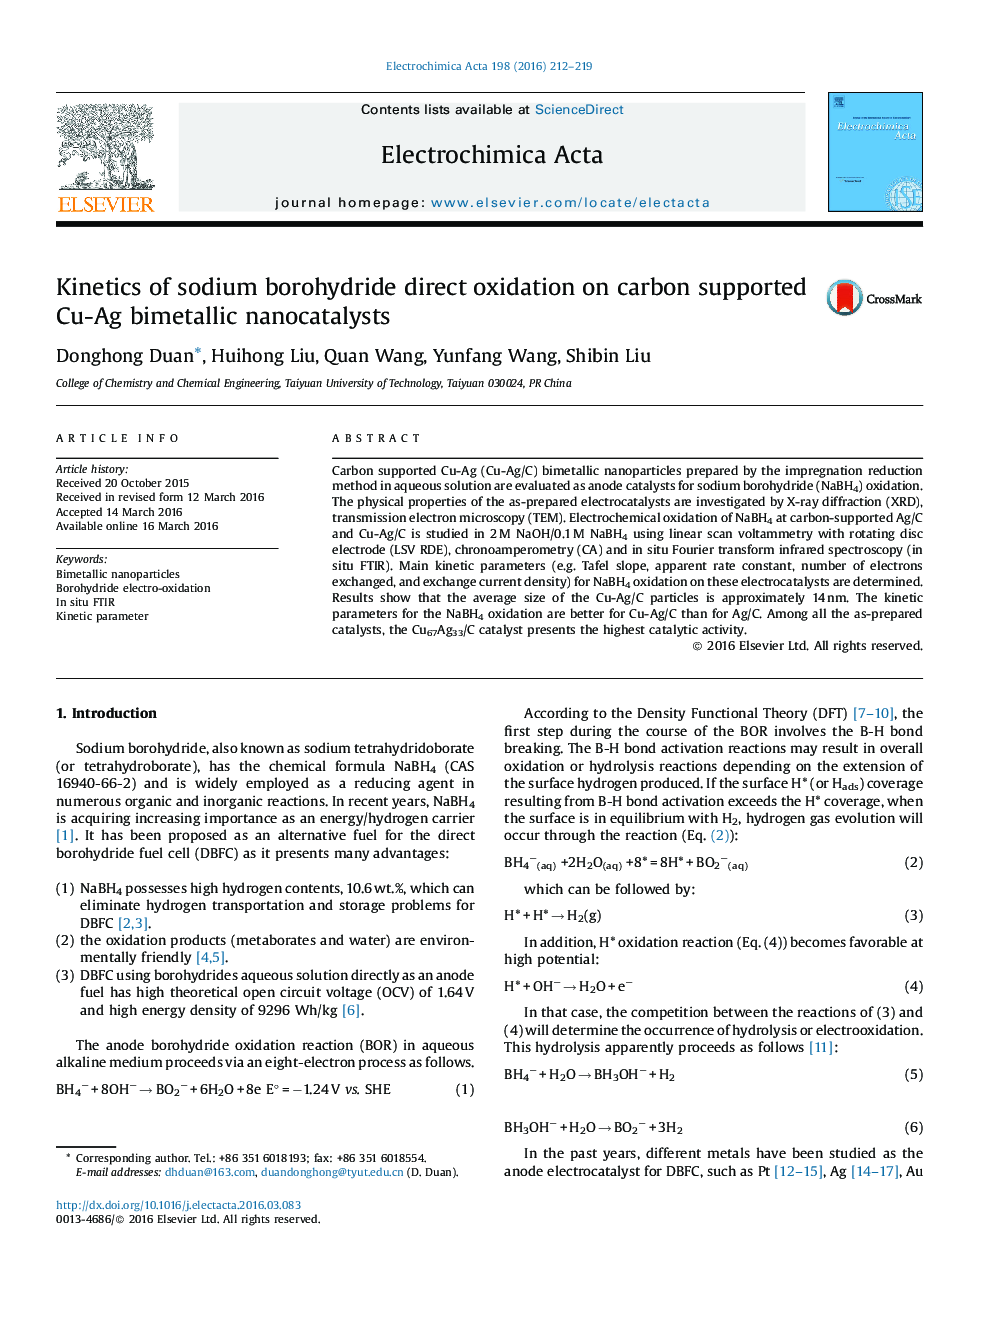 Kinetics of sodium borohydride direct oxidation on carbon supported Cu-Ag bimetallic nanocatalysts